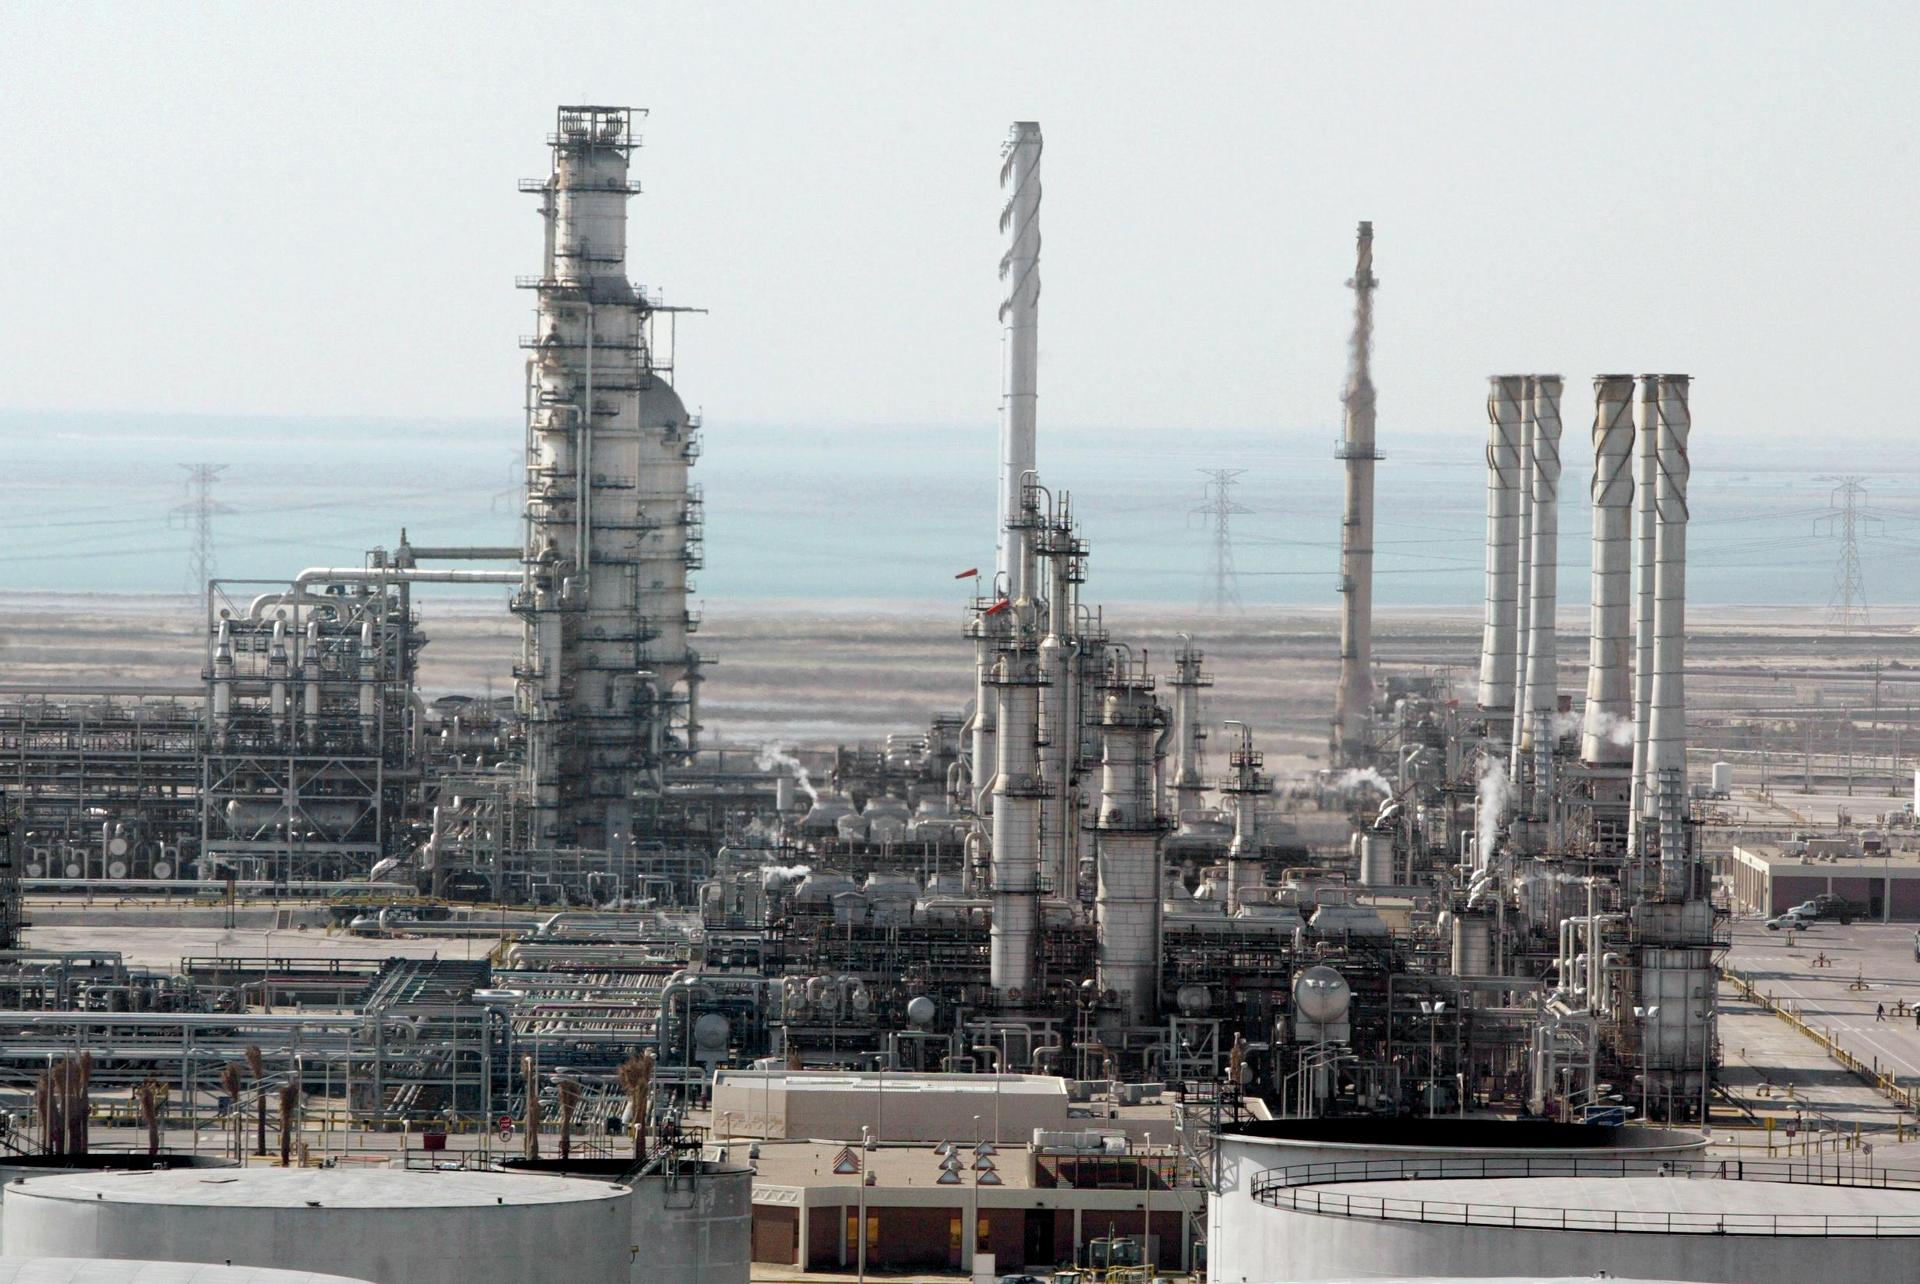 Ras Tannura's oil production plant near Dammam in Saudi Arabia's eastern province. Photo: AFP